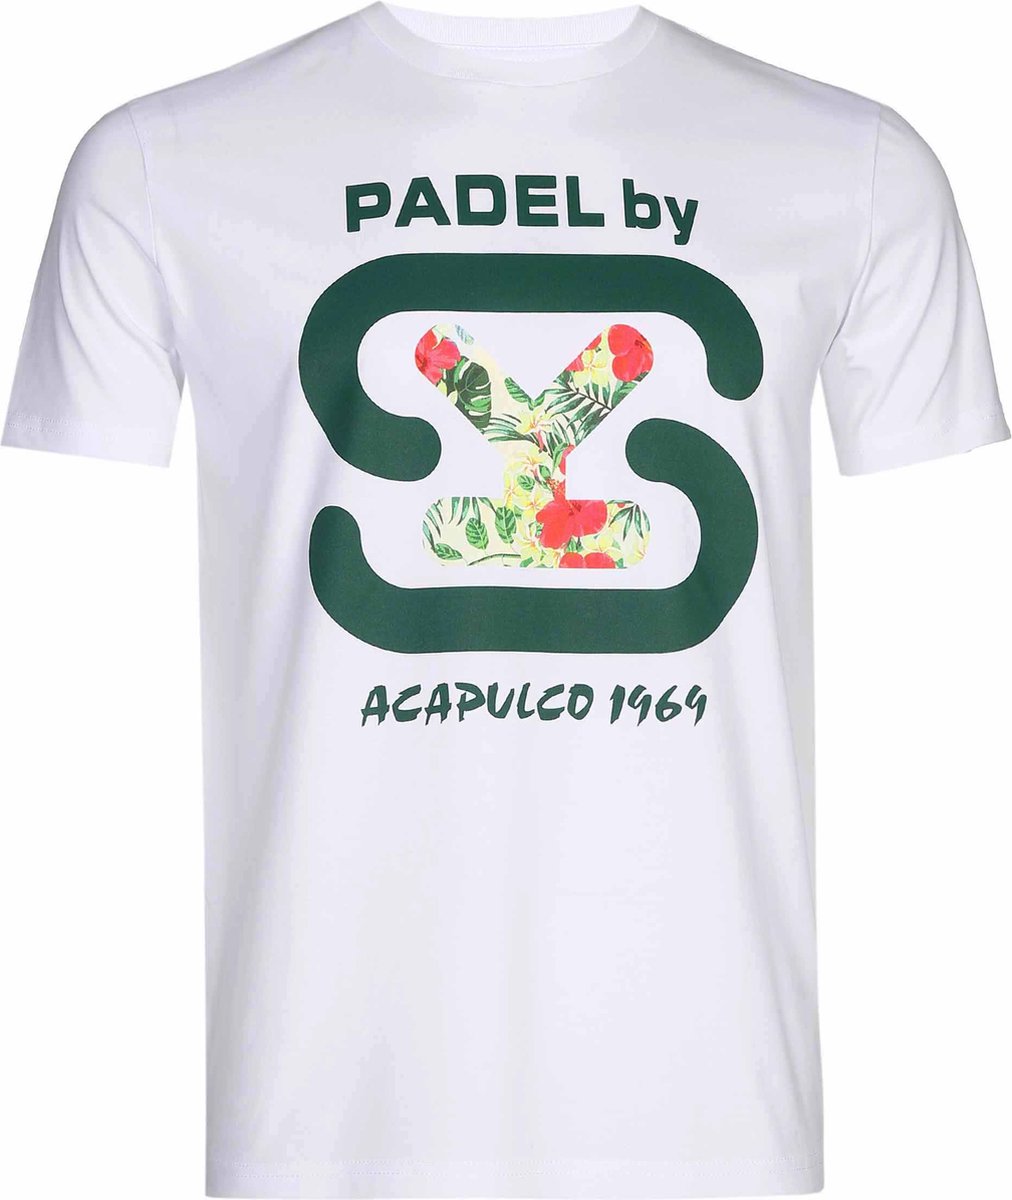 PADELbySY - ACAPULCO 1969 - T-SHIRT MEN'S - WHITE - SIZE S